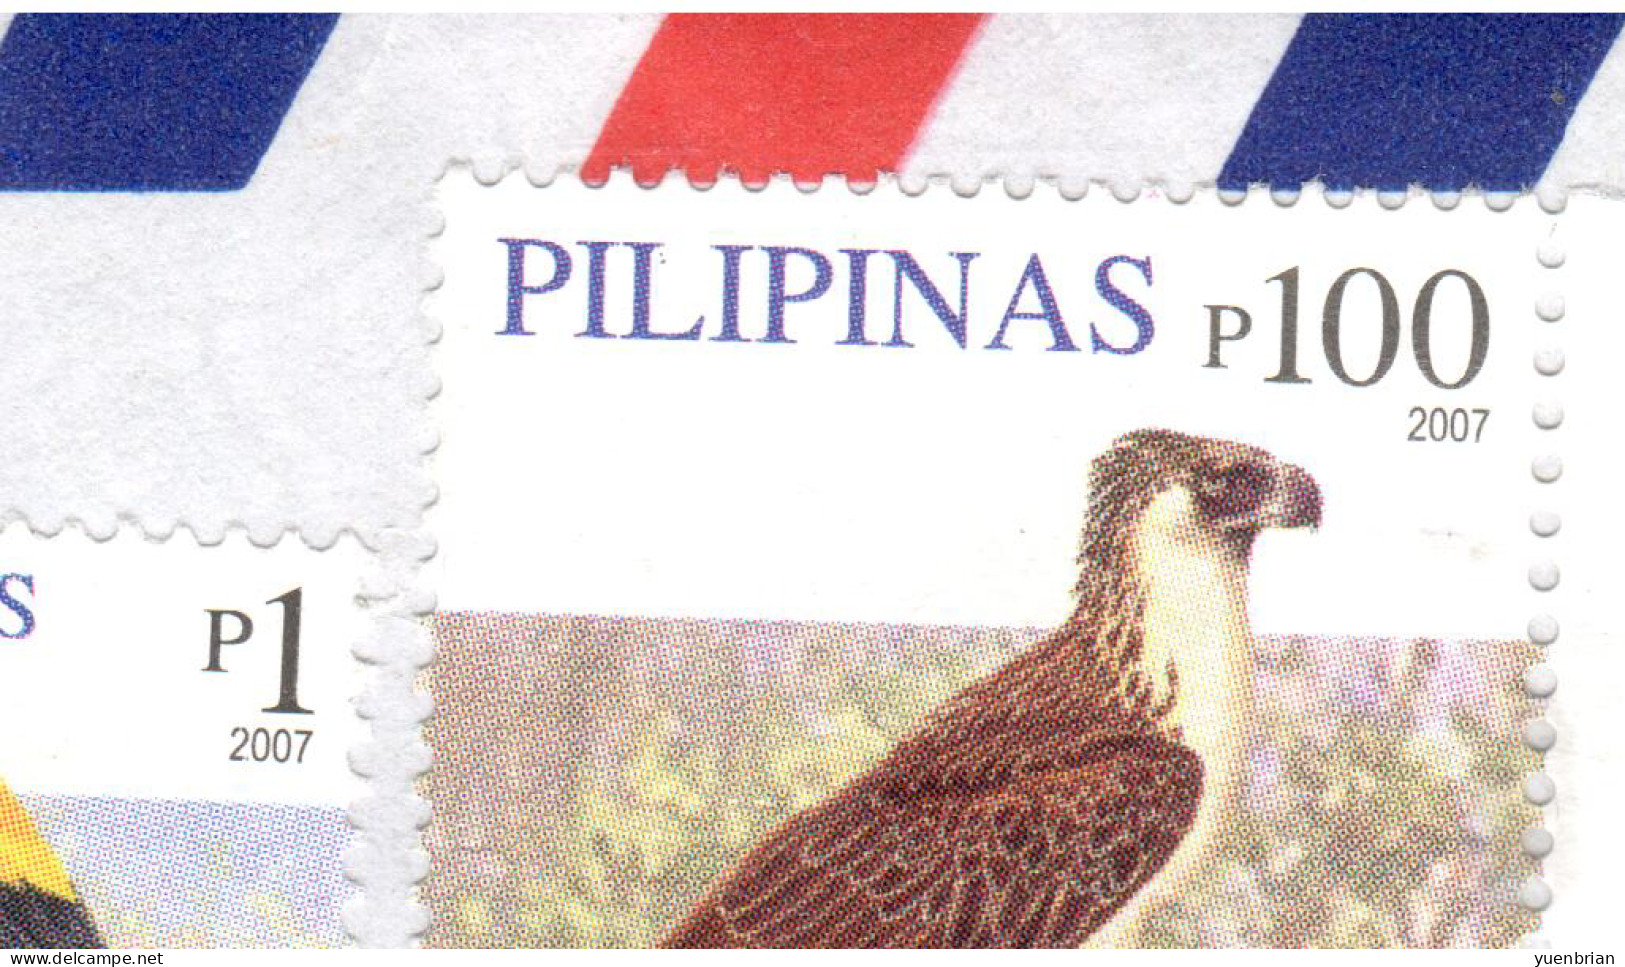 Philippines 2007, Bird, Birds, Eagle (2007), Circulated Cover, Good Condition - Aigles & Rapaces Diurnes